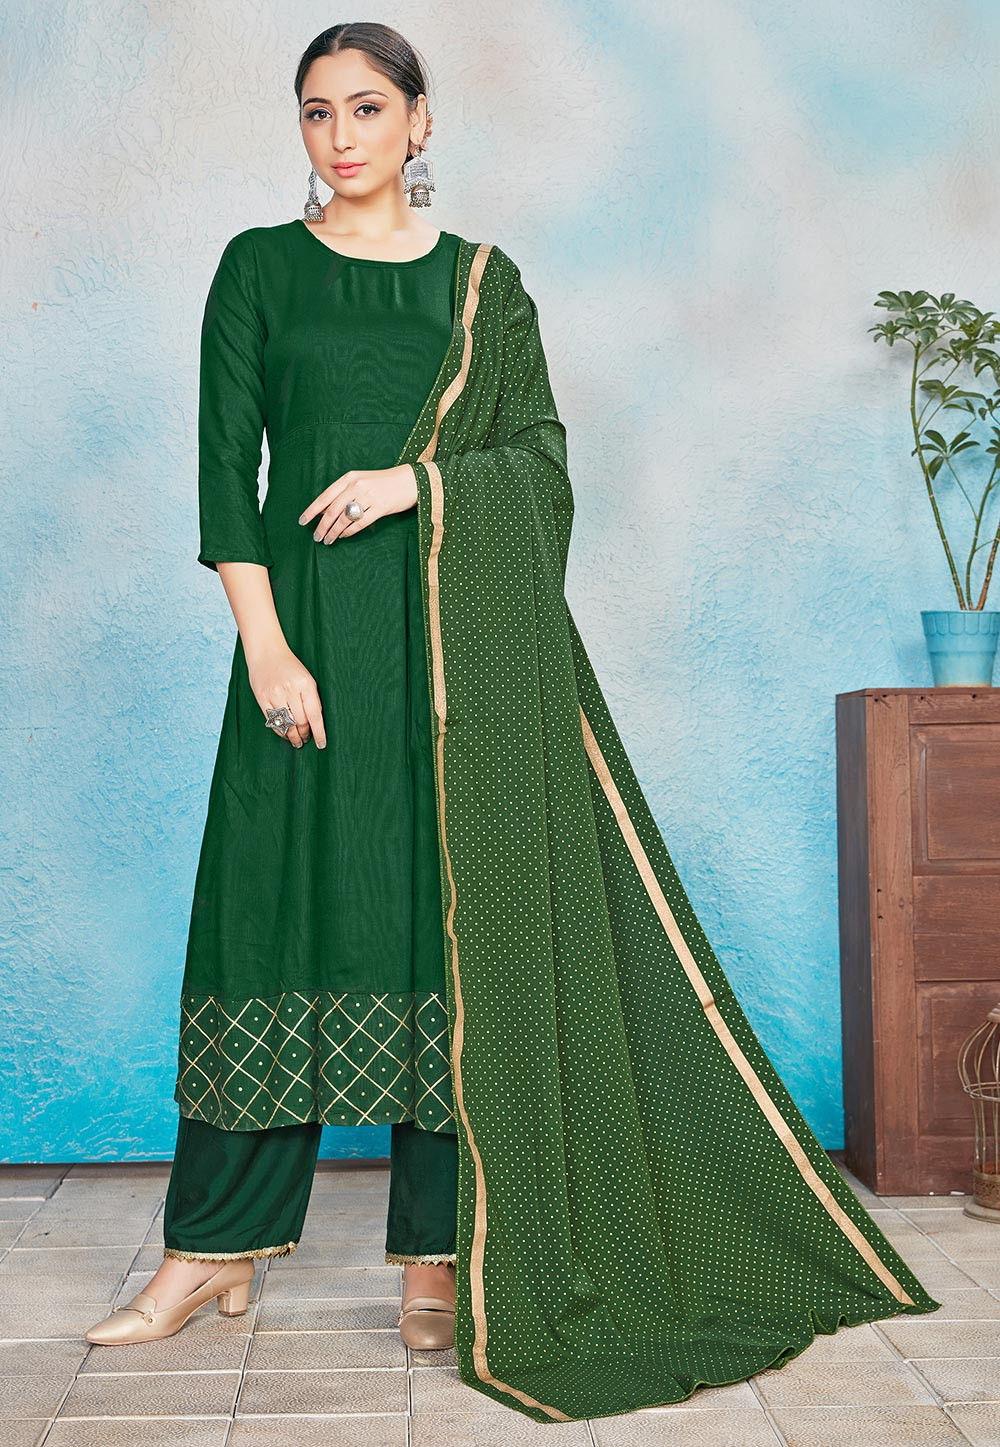 Foil Printed Rayon Anarkali Suit in Green : KJC585